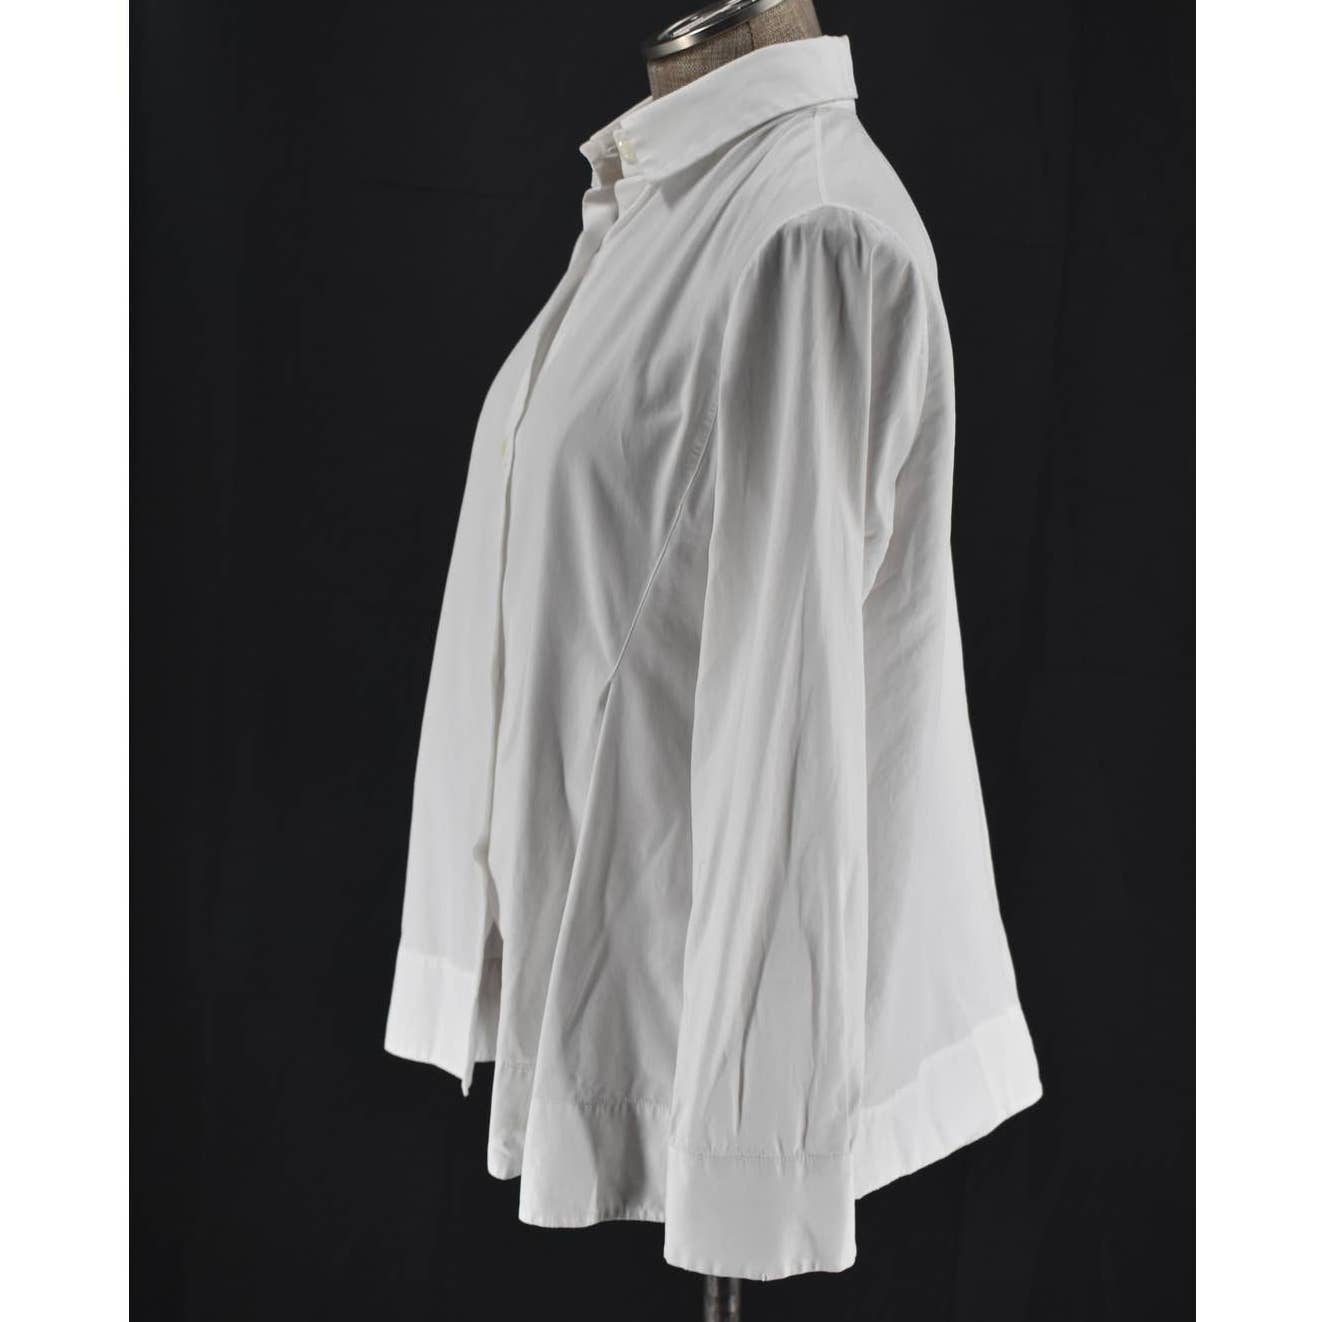 Marni Wide Cut White Button Up Shirt- XS